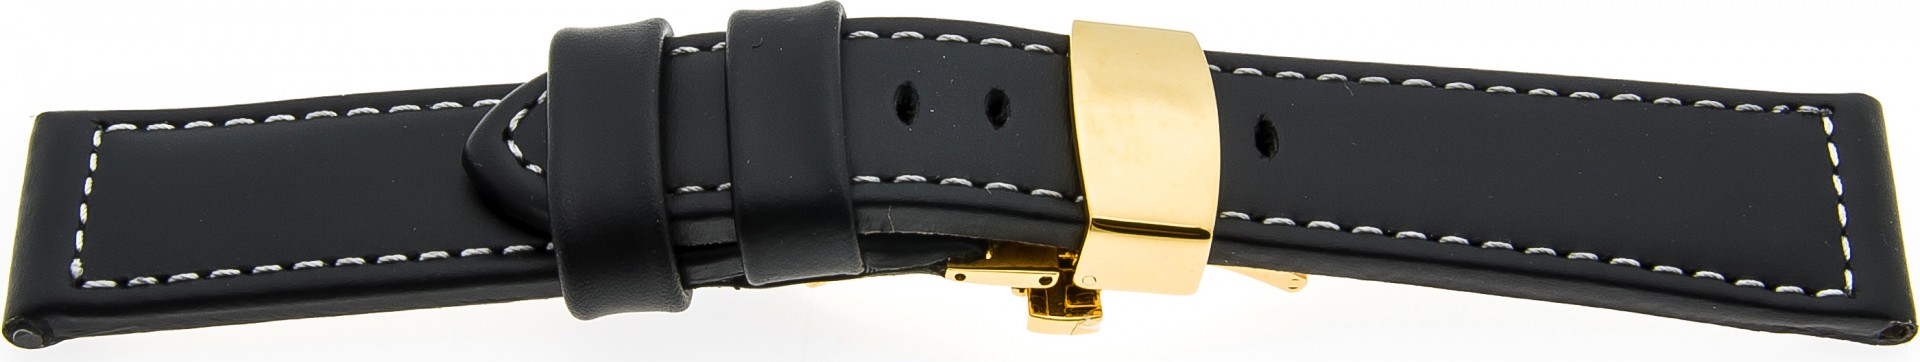   Uhrenarmband PAN-Glatt Butterfly-Schließe - Leder, extra stark - schwarz mit weißer Naht 